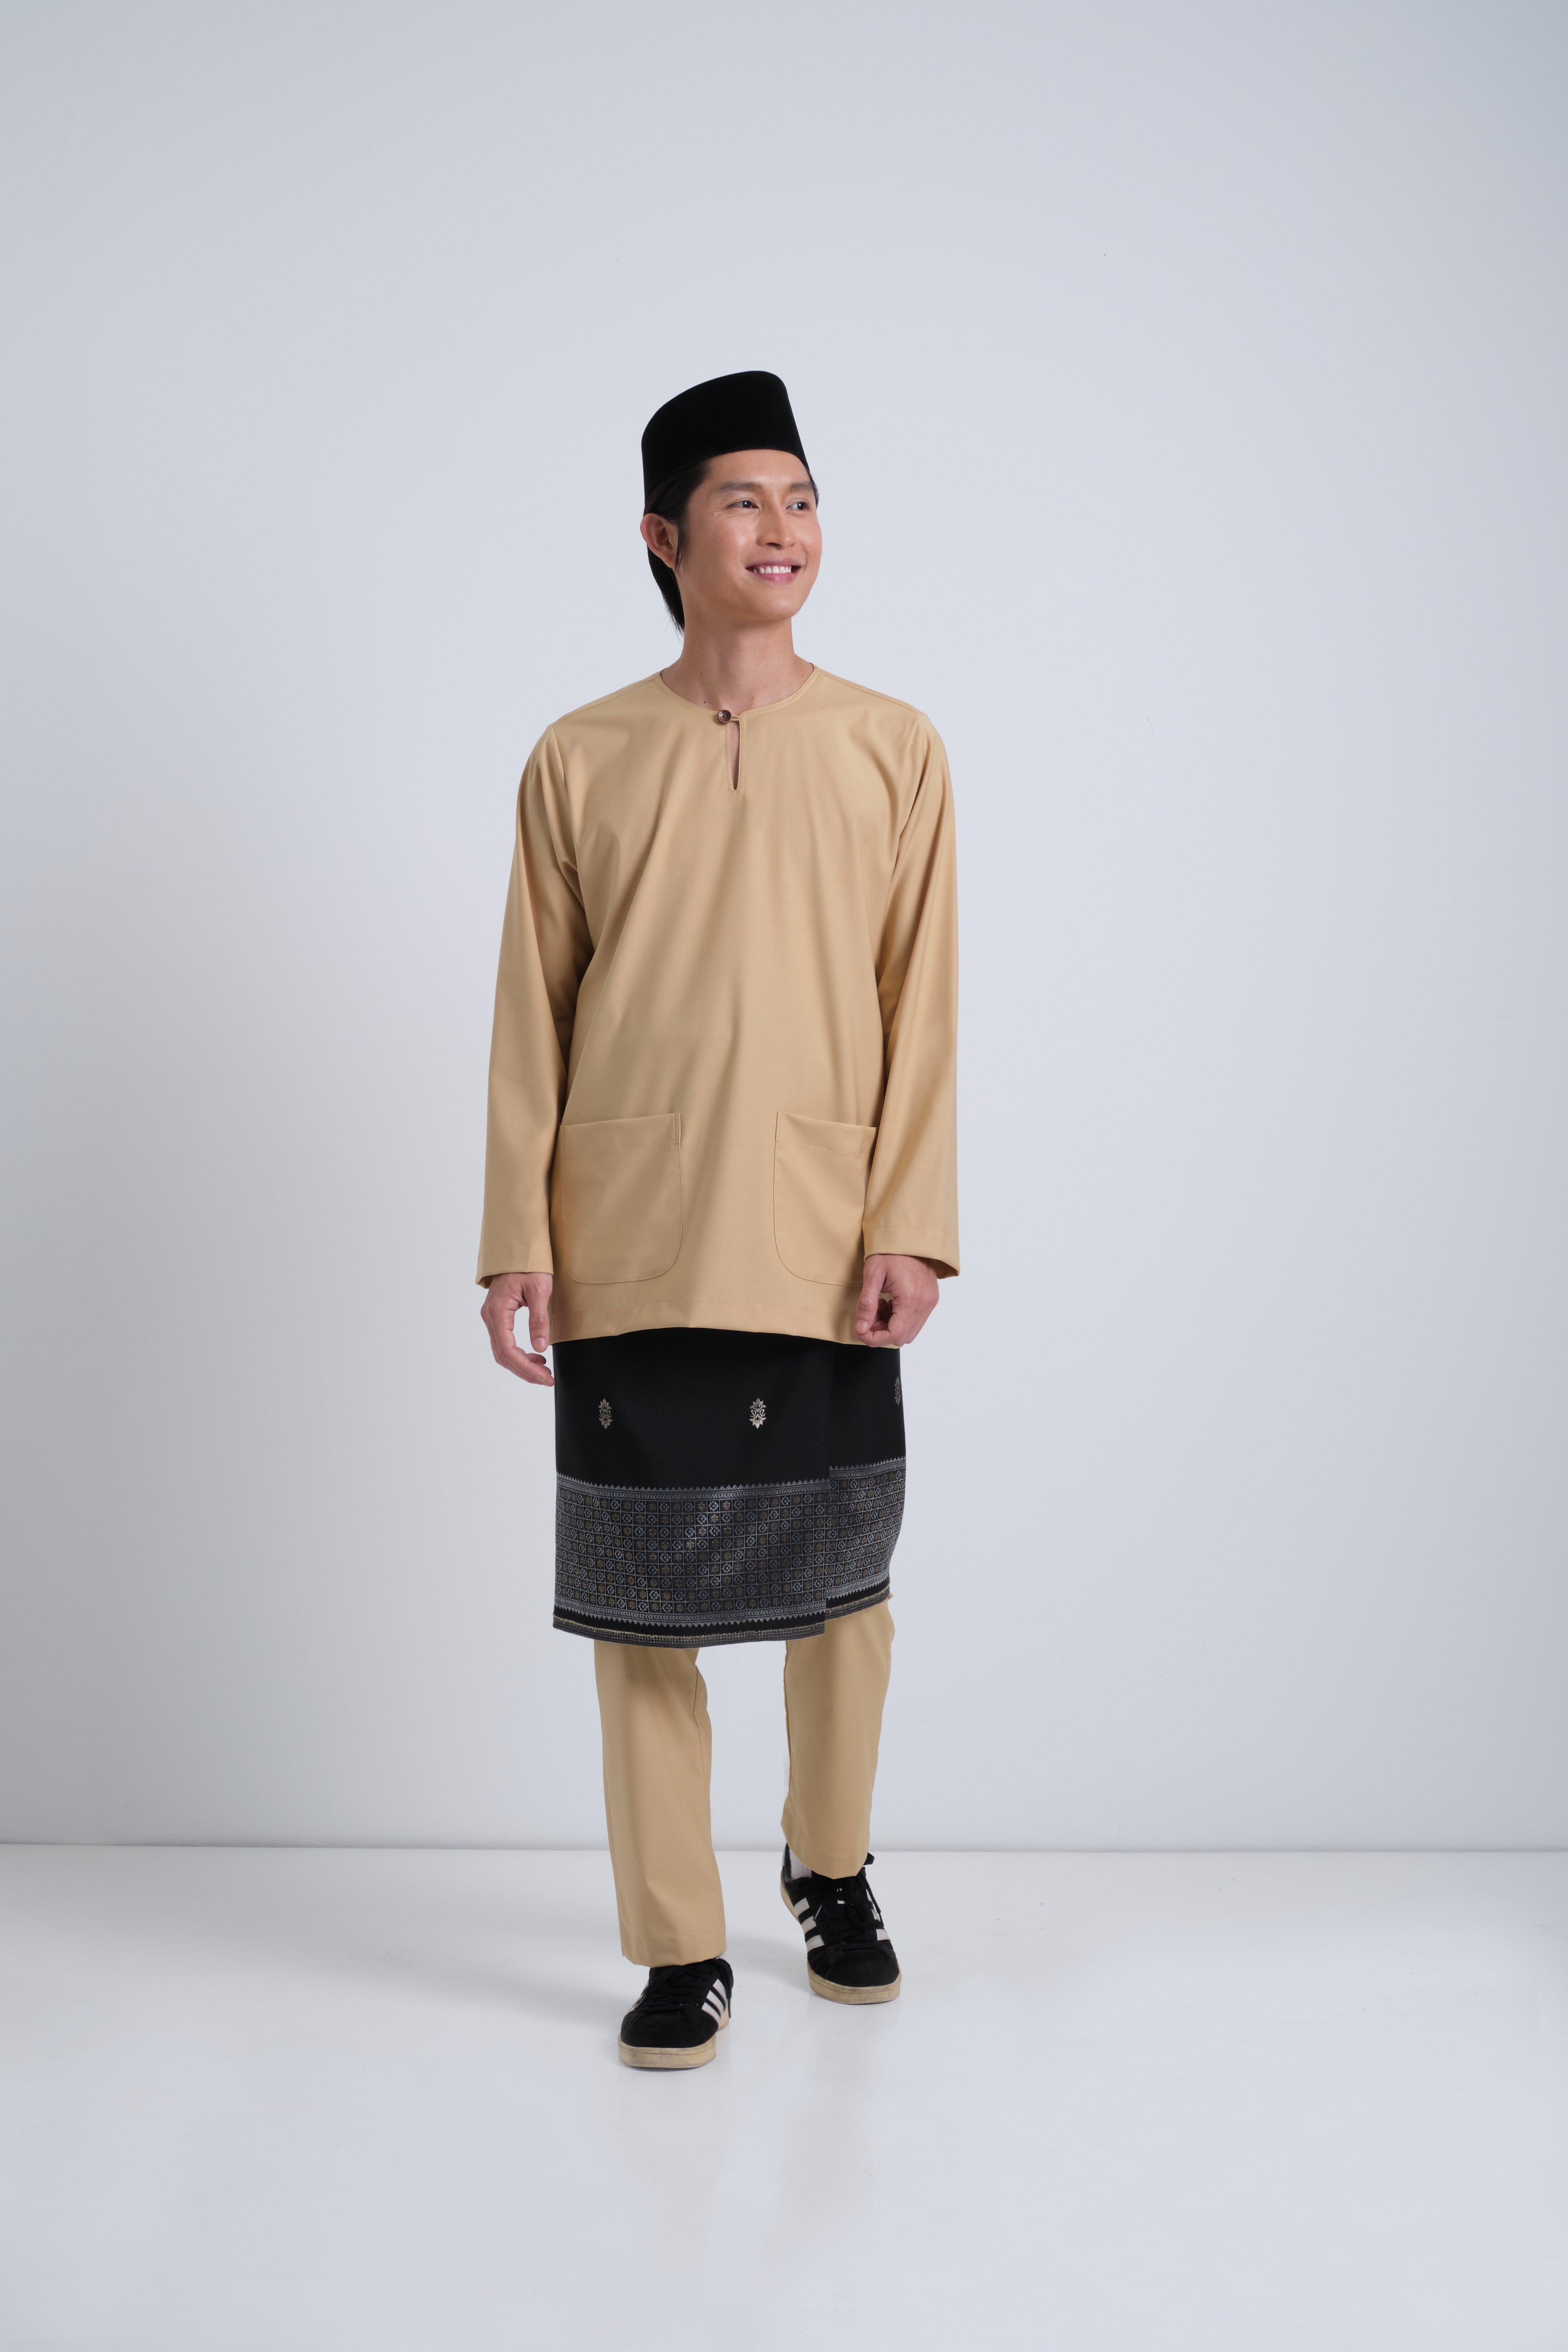 Patawali Modern Fit Baju Melayu Teluk Belanga - Golden Rod